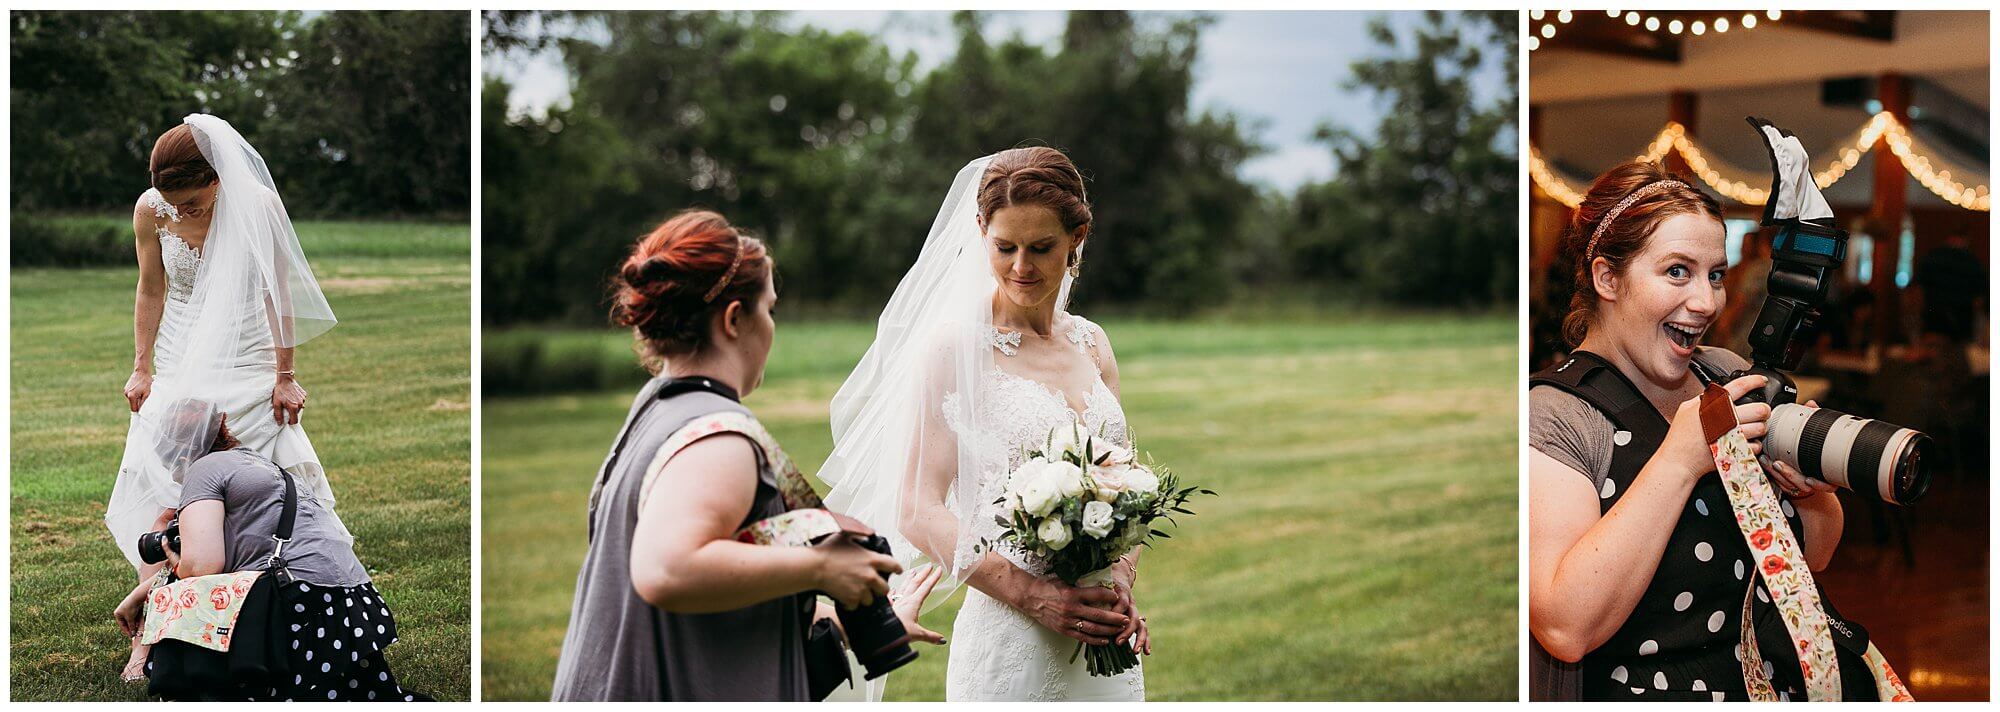 photographer adjusting bride's dress during iowa wedding